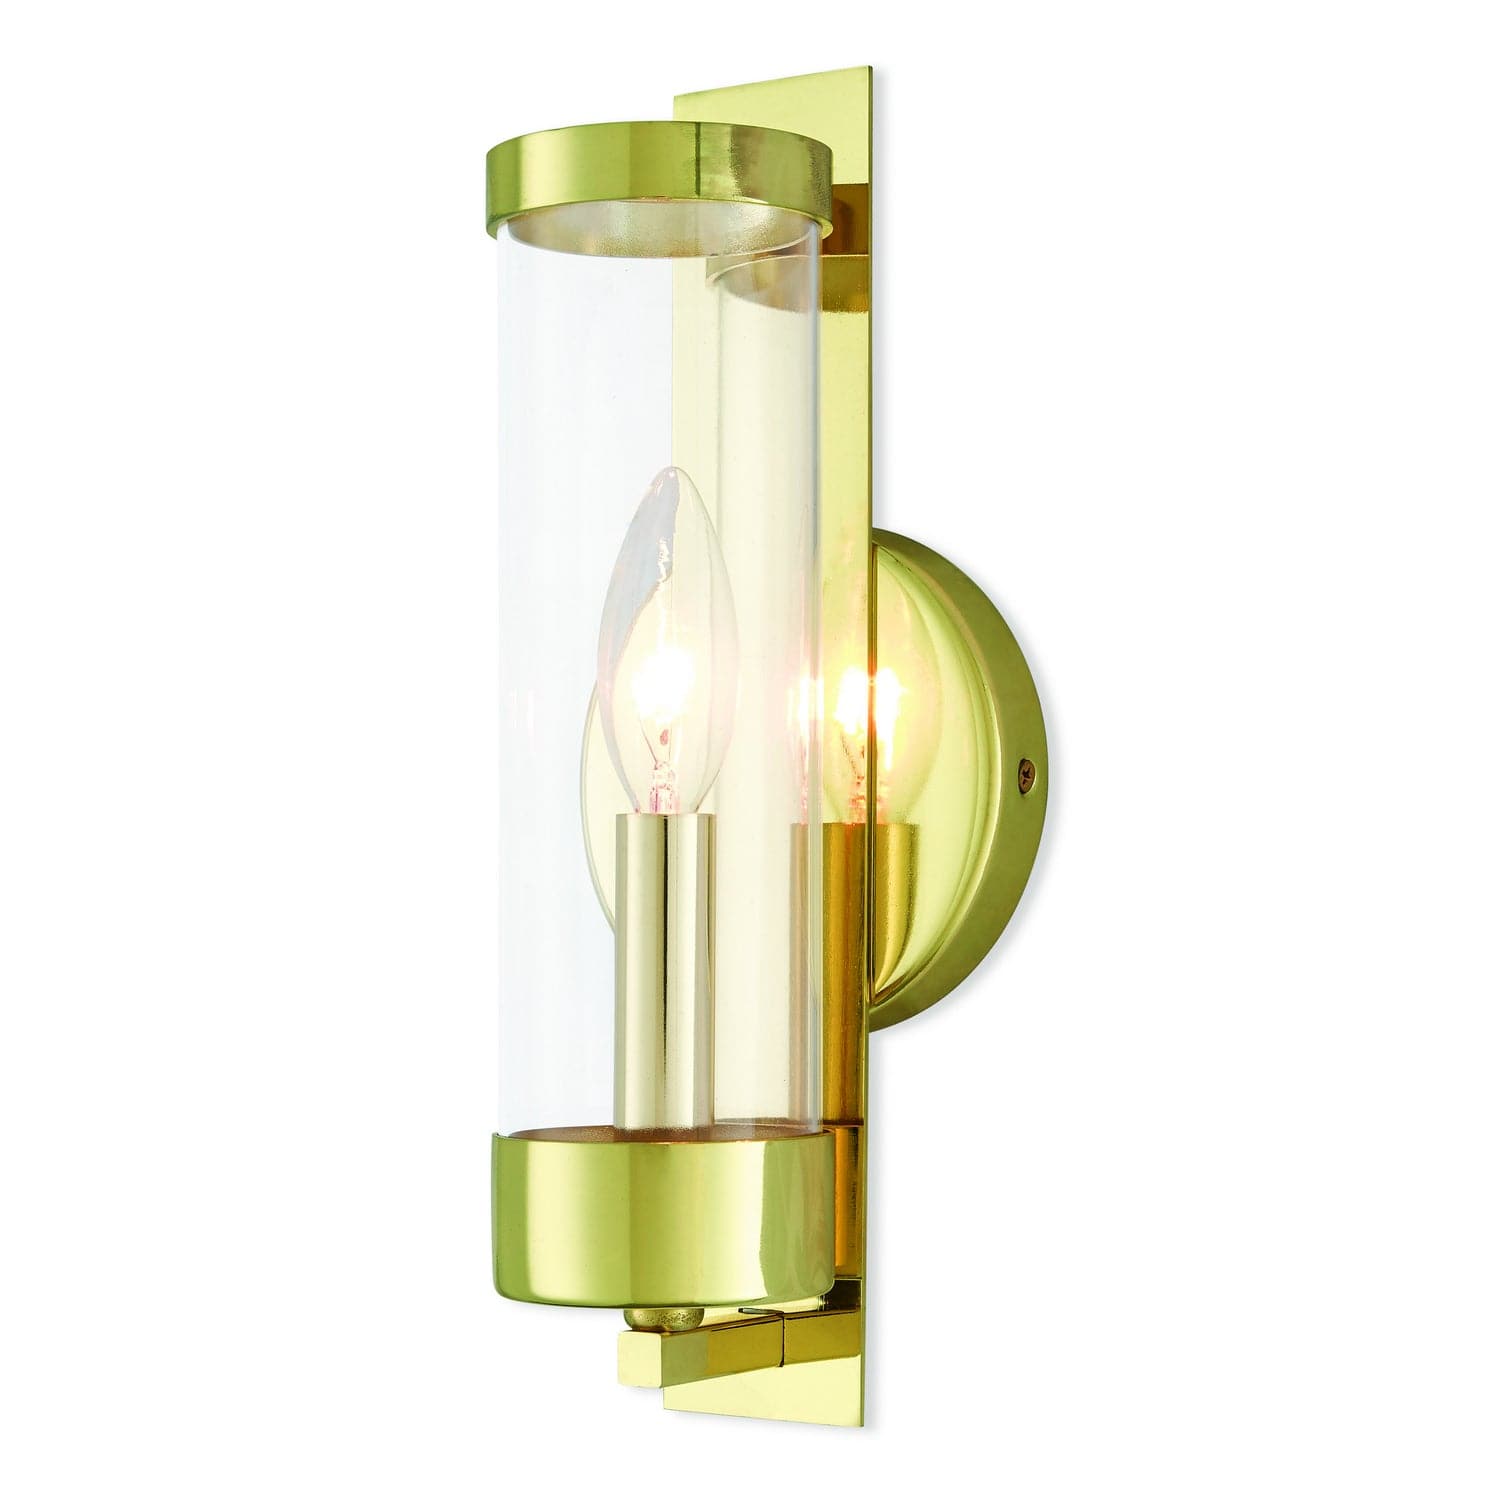 Livex Lighting - 10141-02 - One Light Wall Sconce - Castleton - Polished Brass